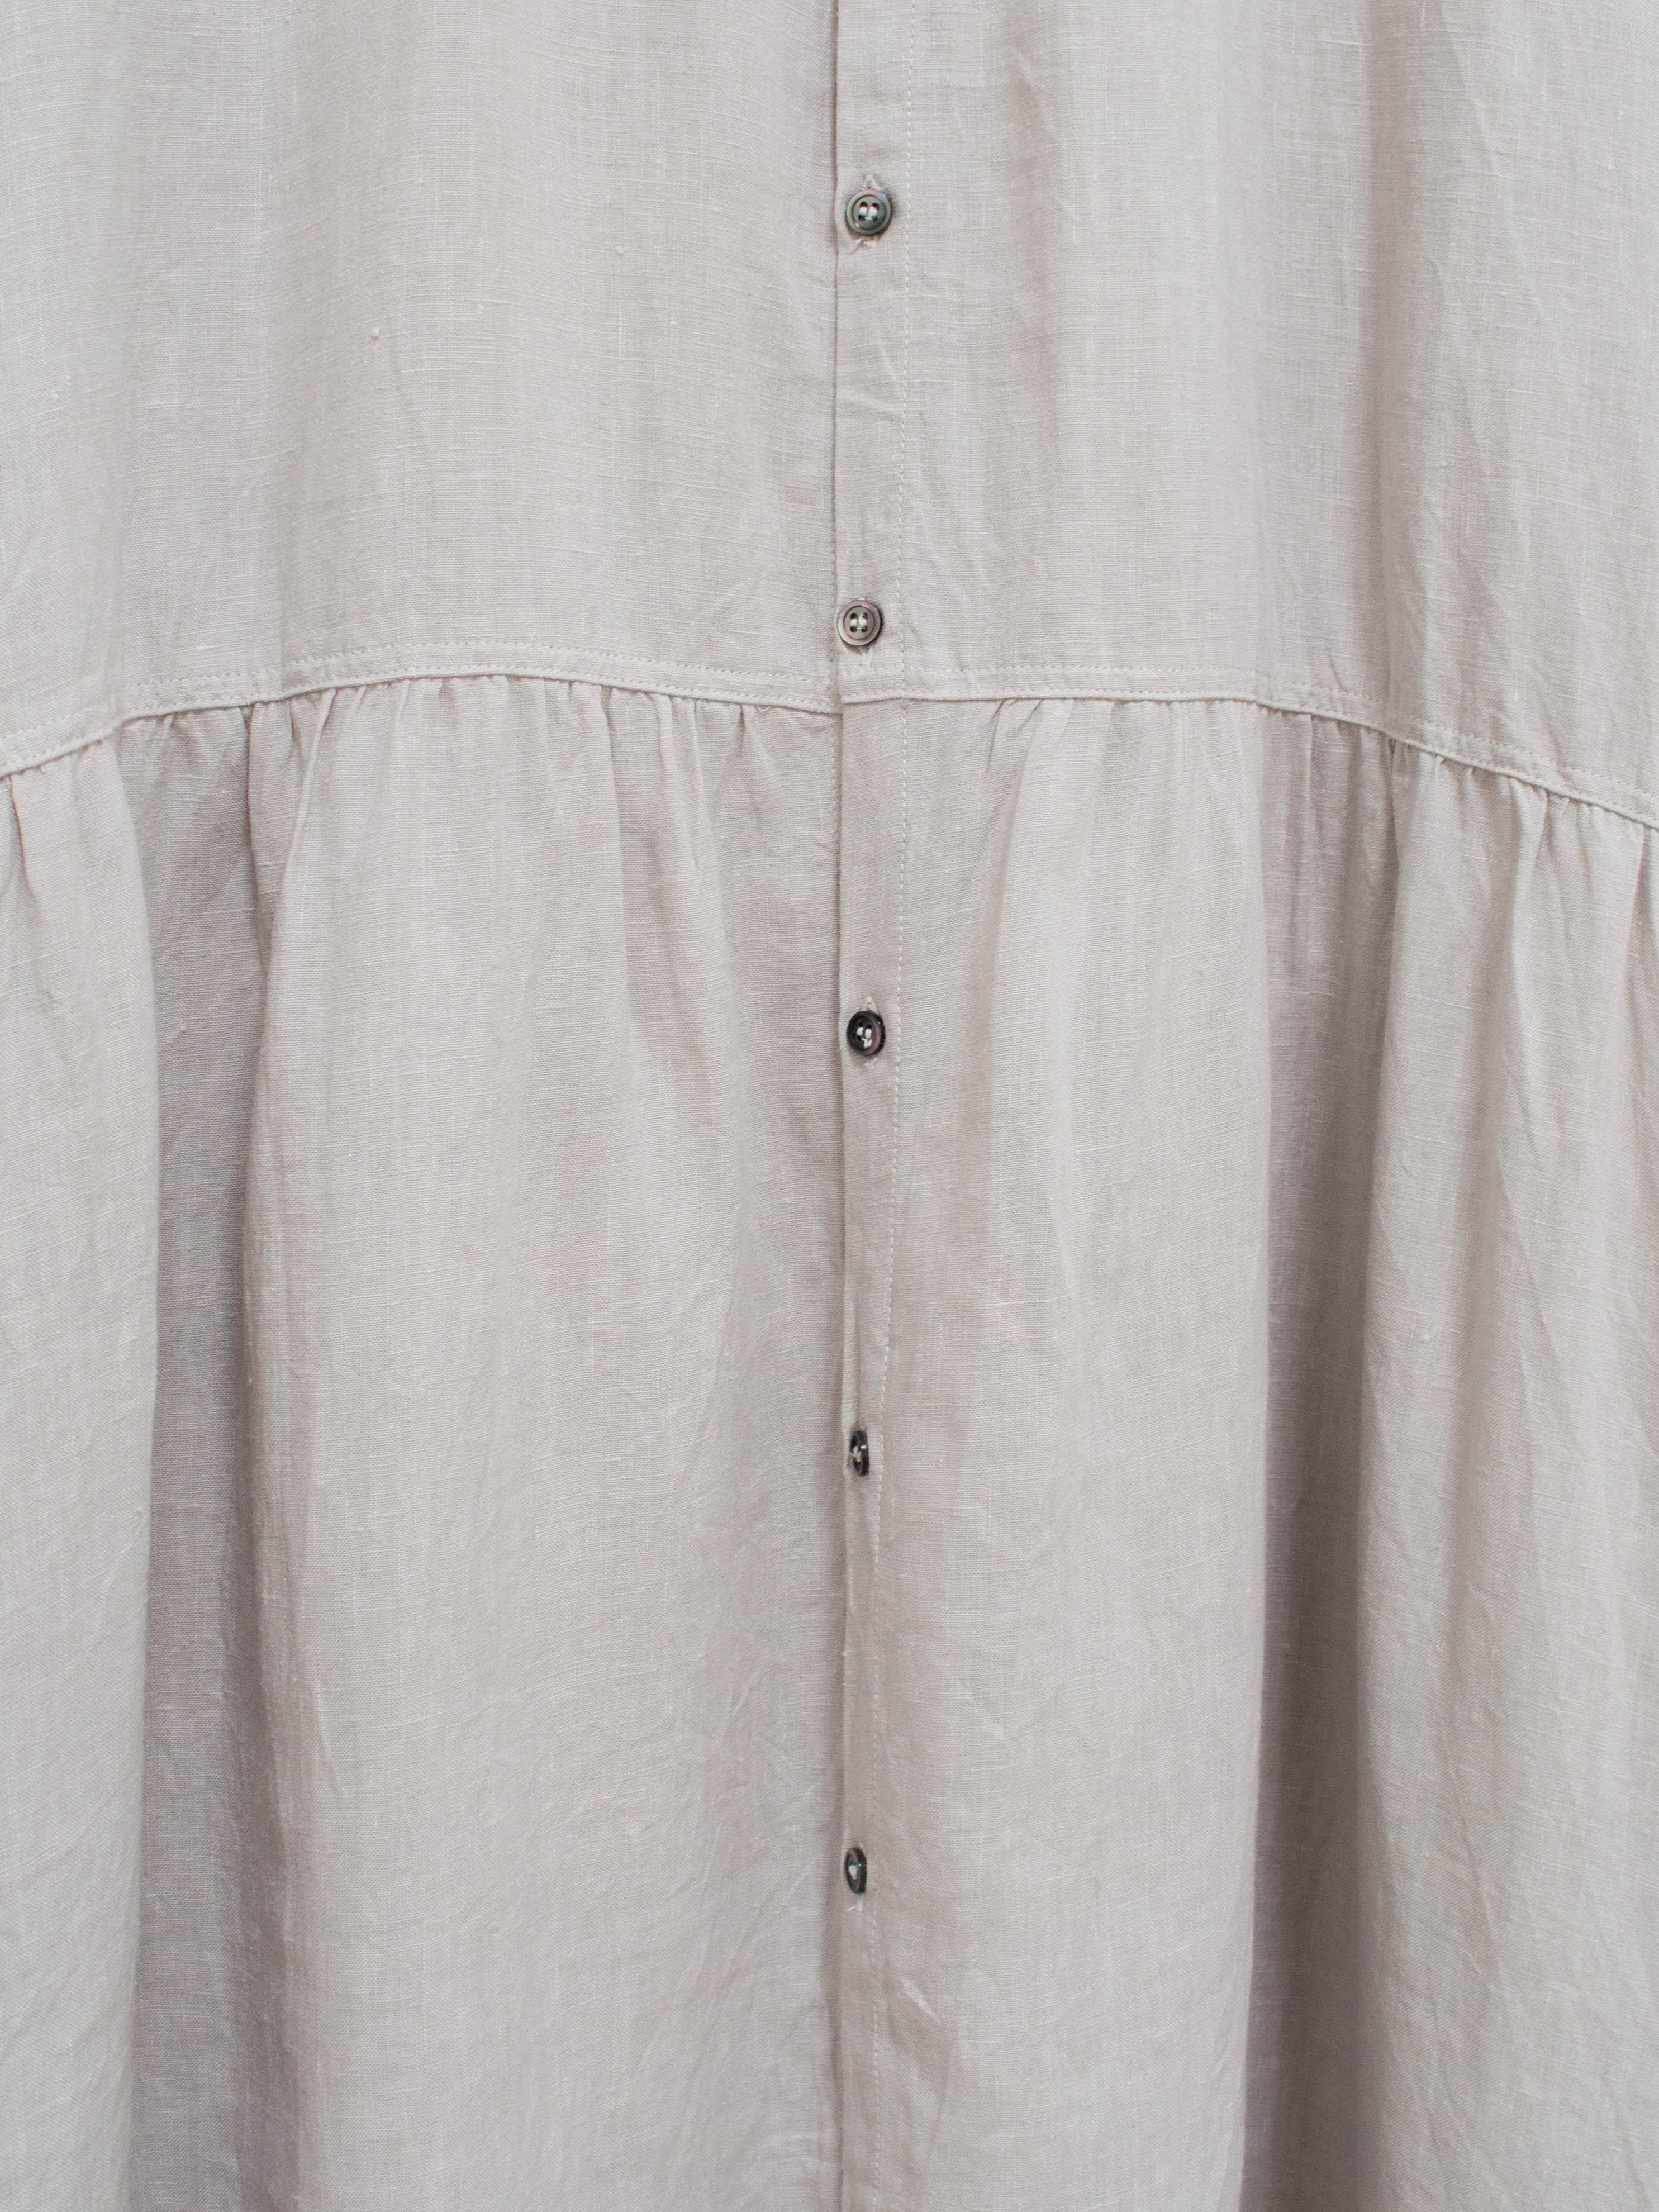 Namu Shop - Ichi Antiquites Color Linen Gather Dress - Light Gray